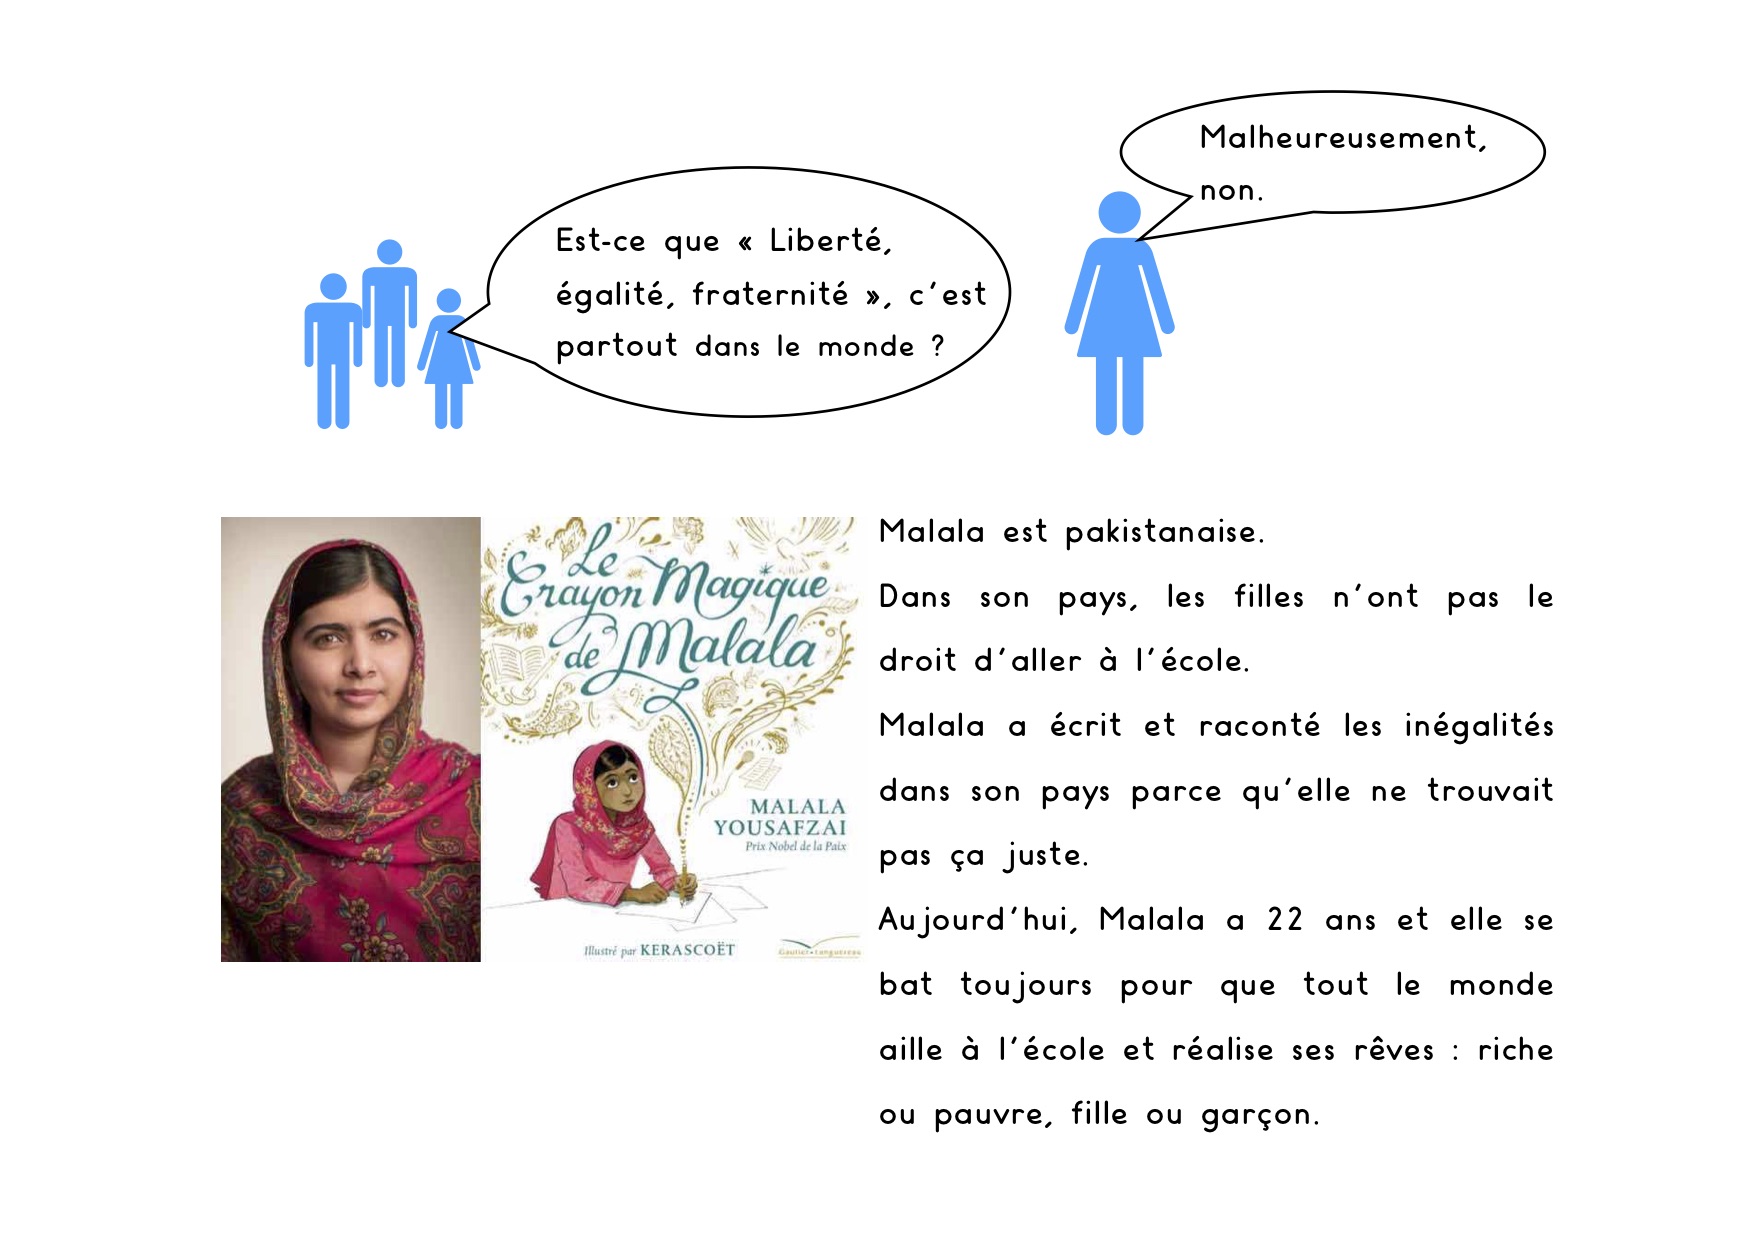 Le crayon magique de Malala - FichesPédagogiques.com